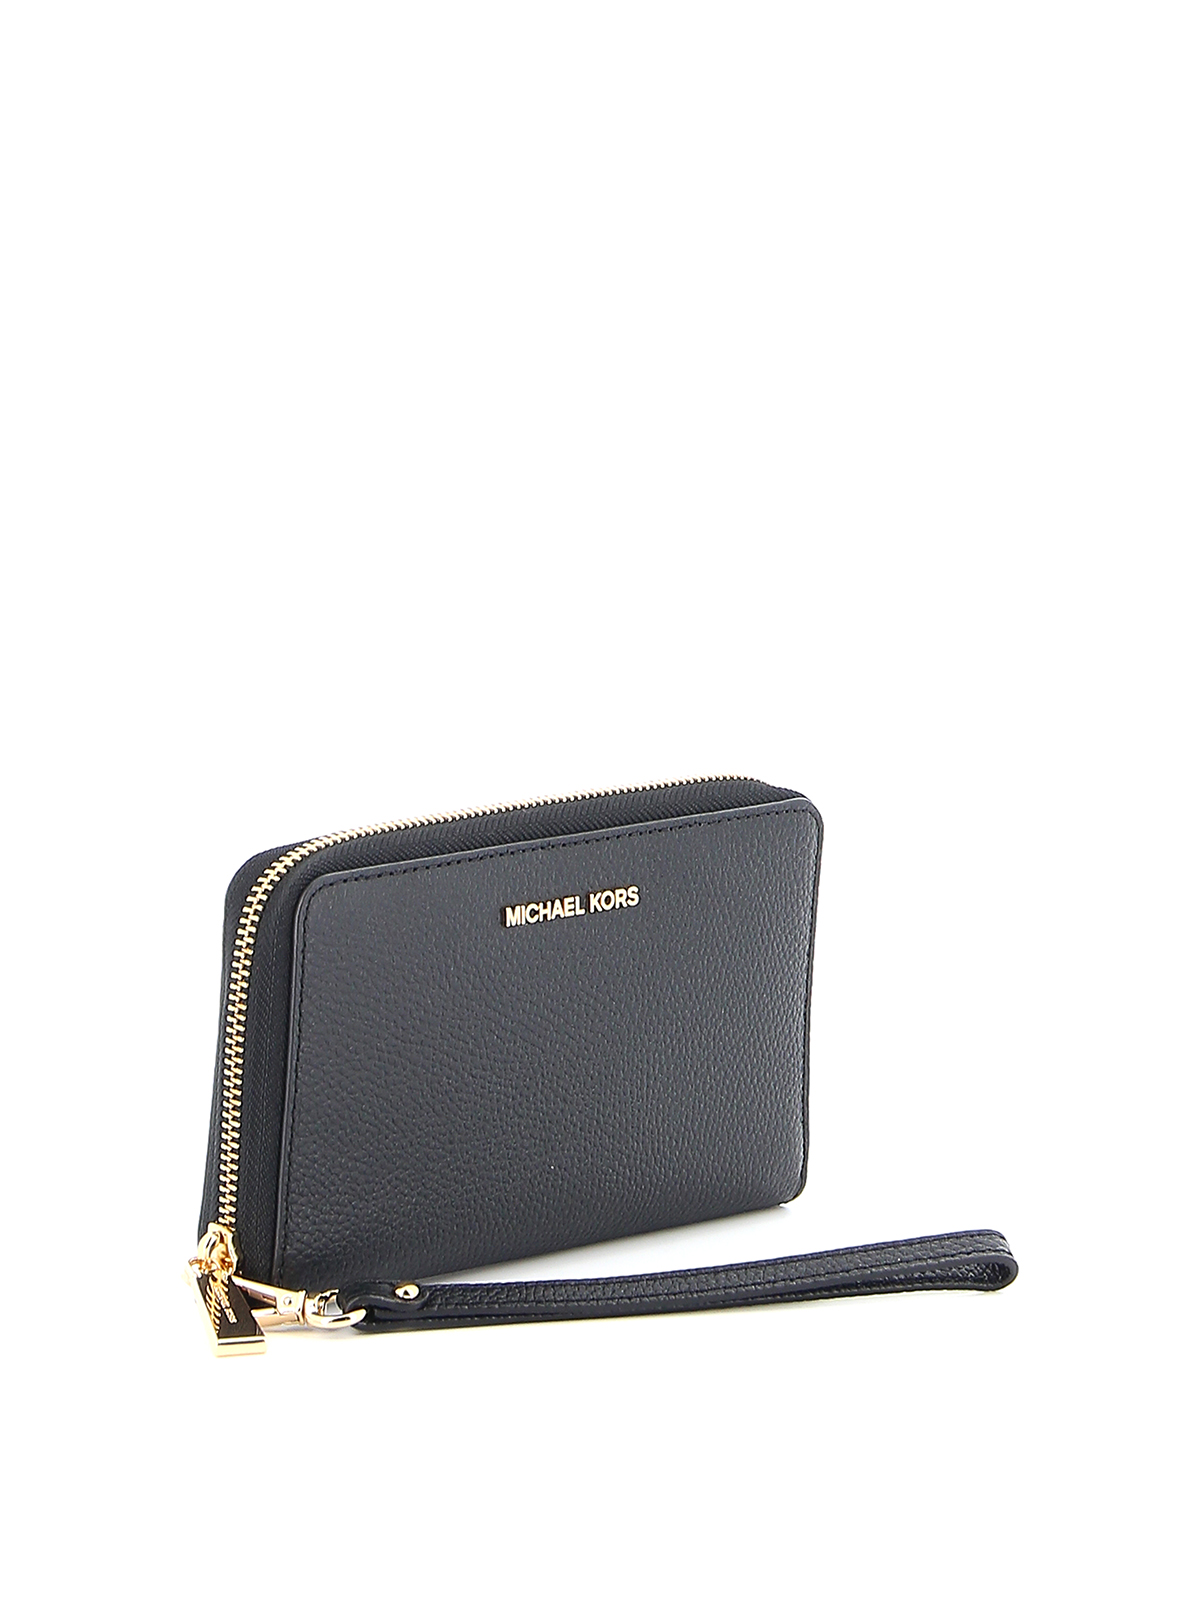 Wallets & purses Michael Kors - Jet Set large leather smartphone wallet -  34F9GM9E3L001